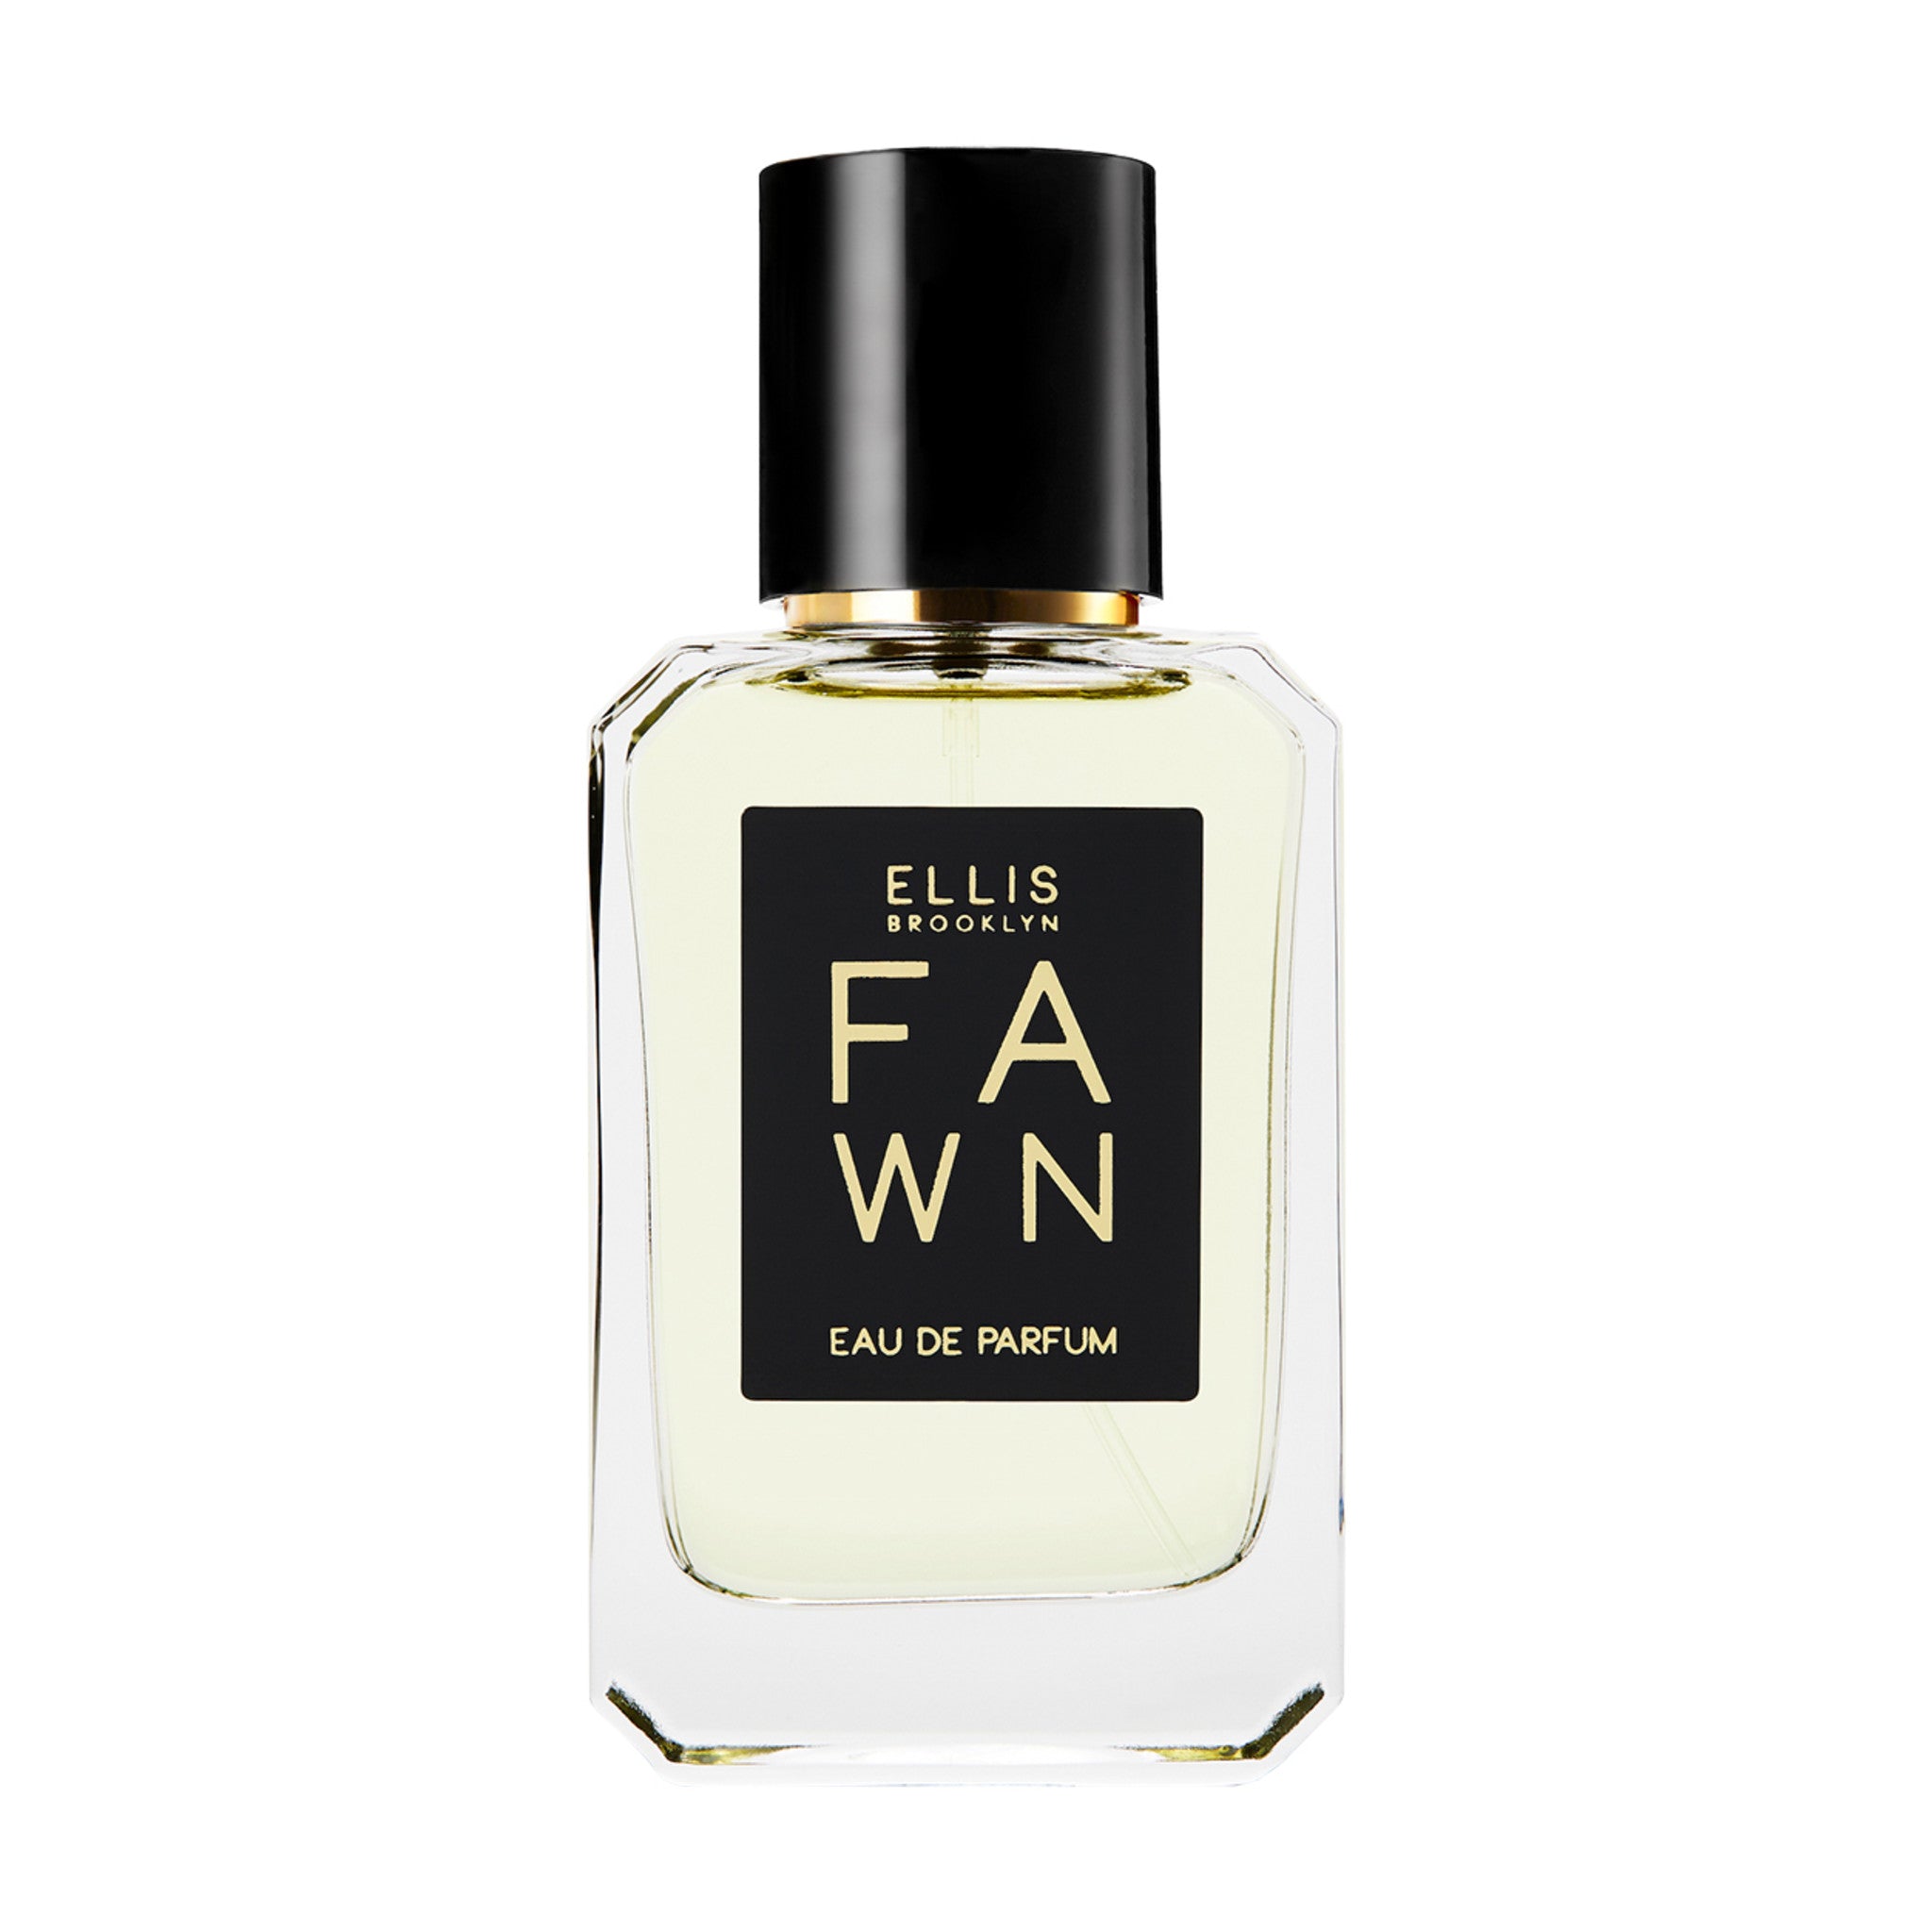 Ellis Brooklyn Fawn Eau de Parfum Size variant: 1.7 oz main image.